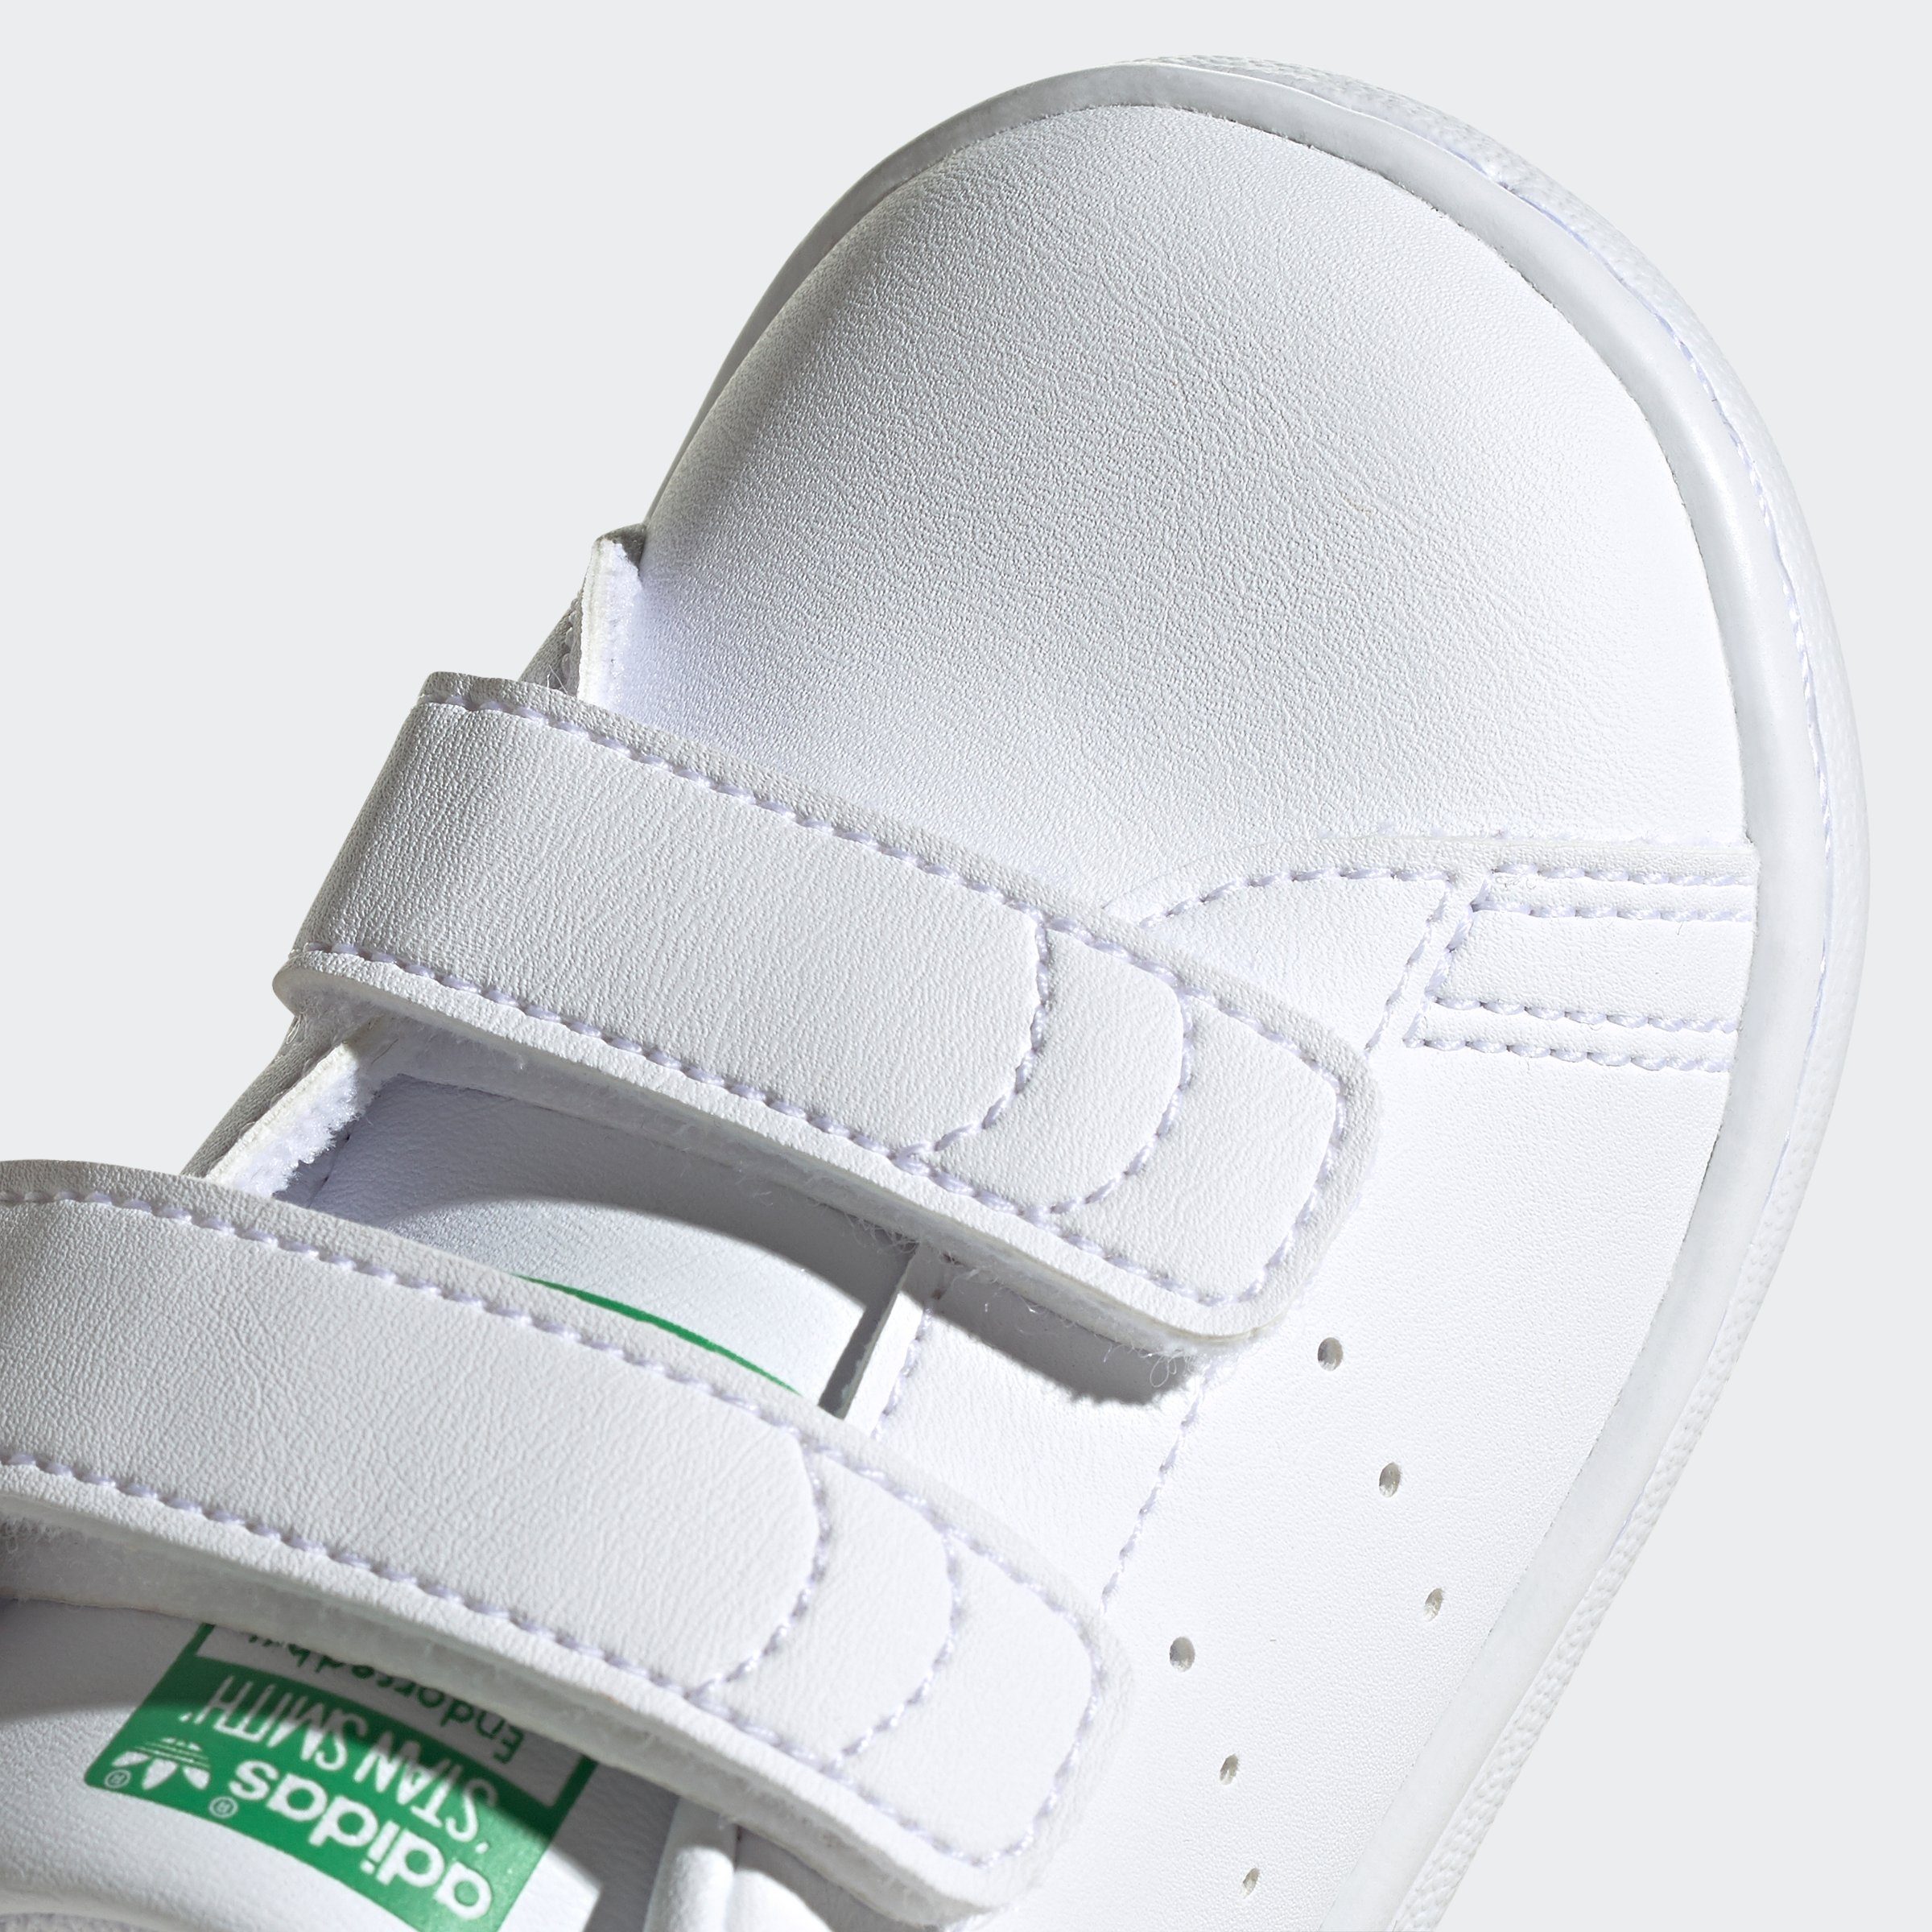 adidas Originals White / Sneaker / Green White STAN Cloud SMITH Cloud